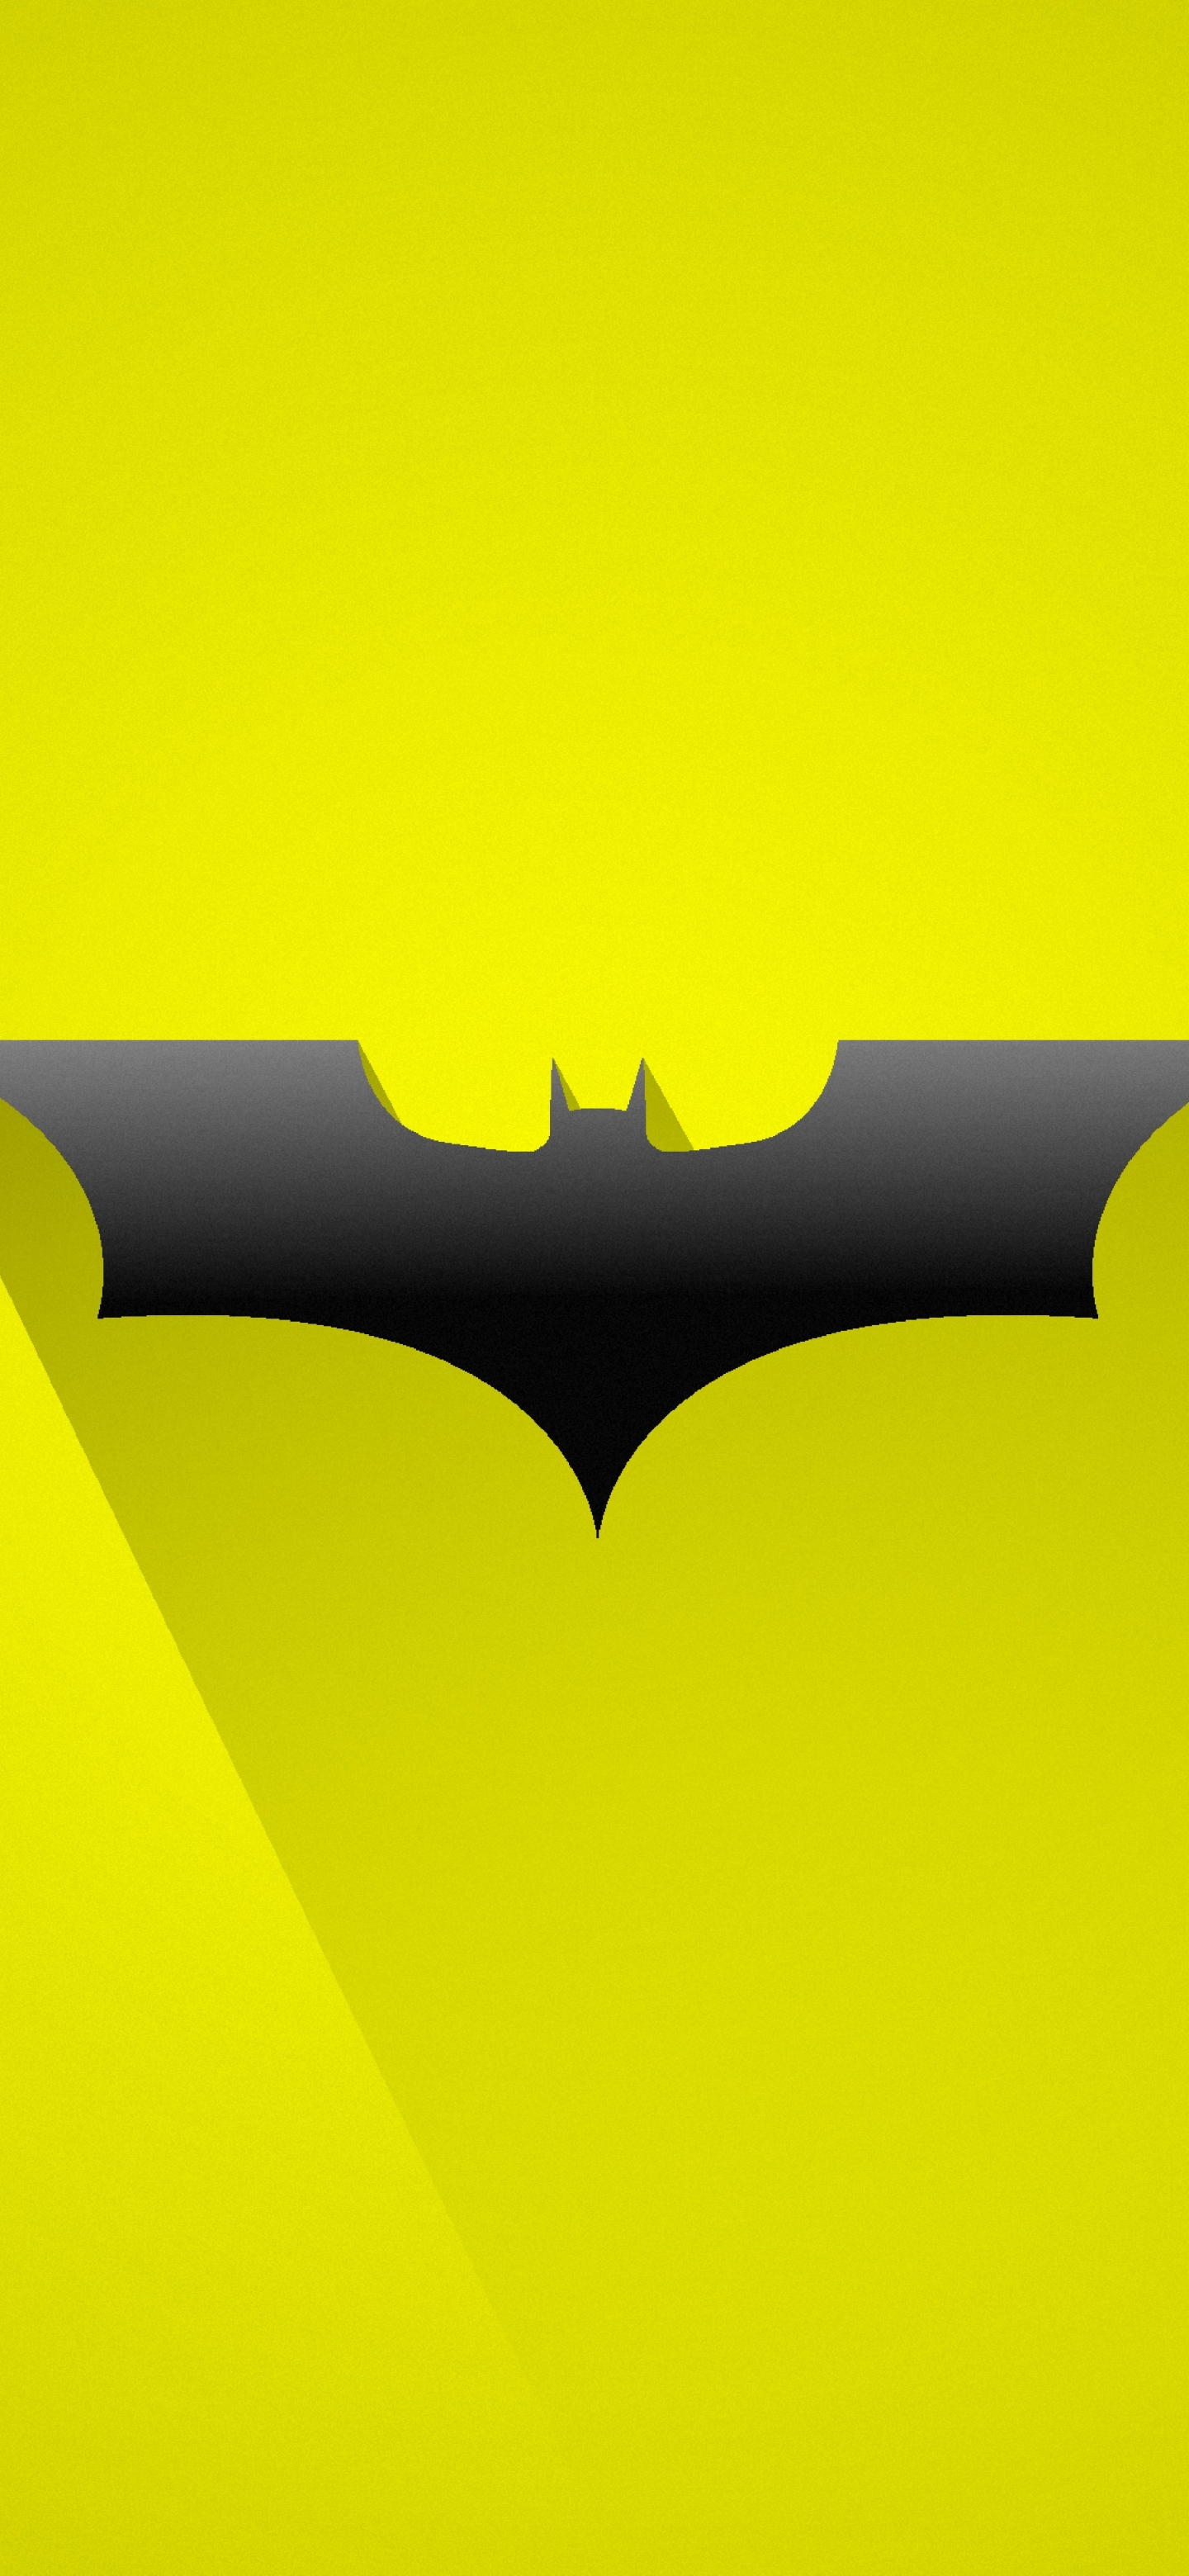 Batman 4k Wallpapers - Top Ultra 4k Batman Backgrounds Download